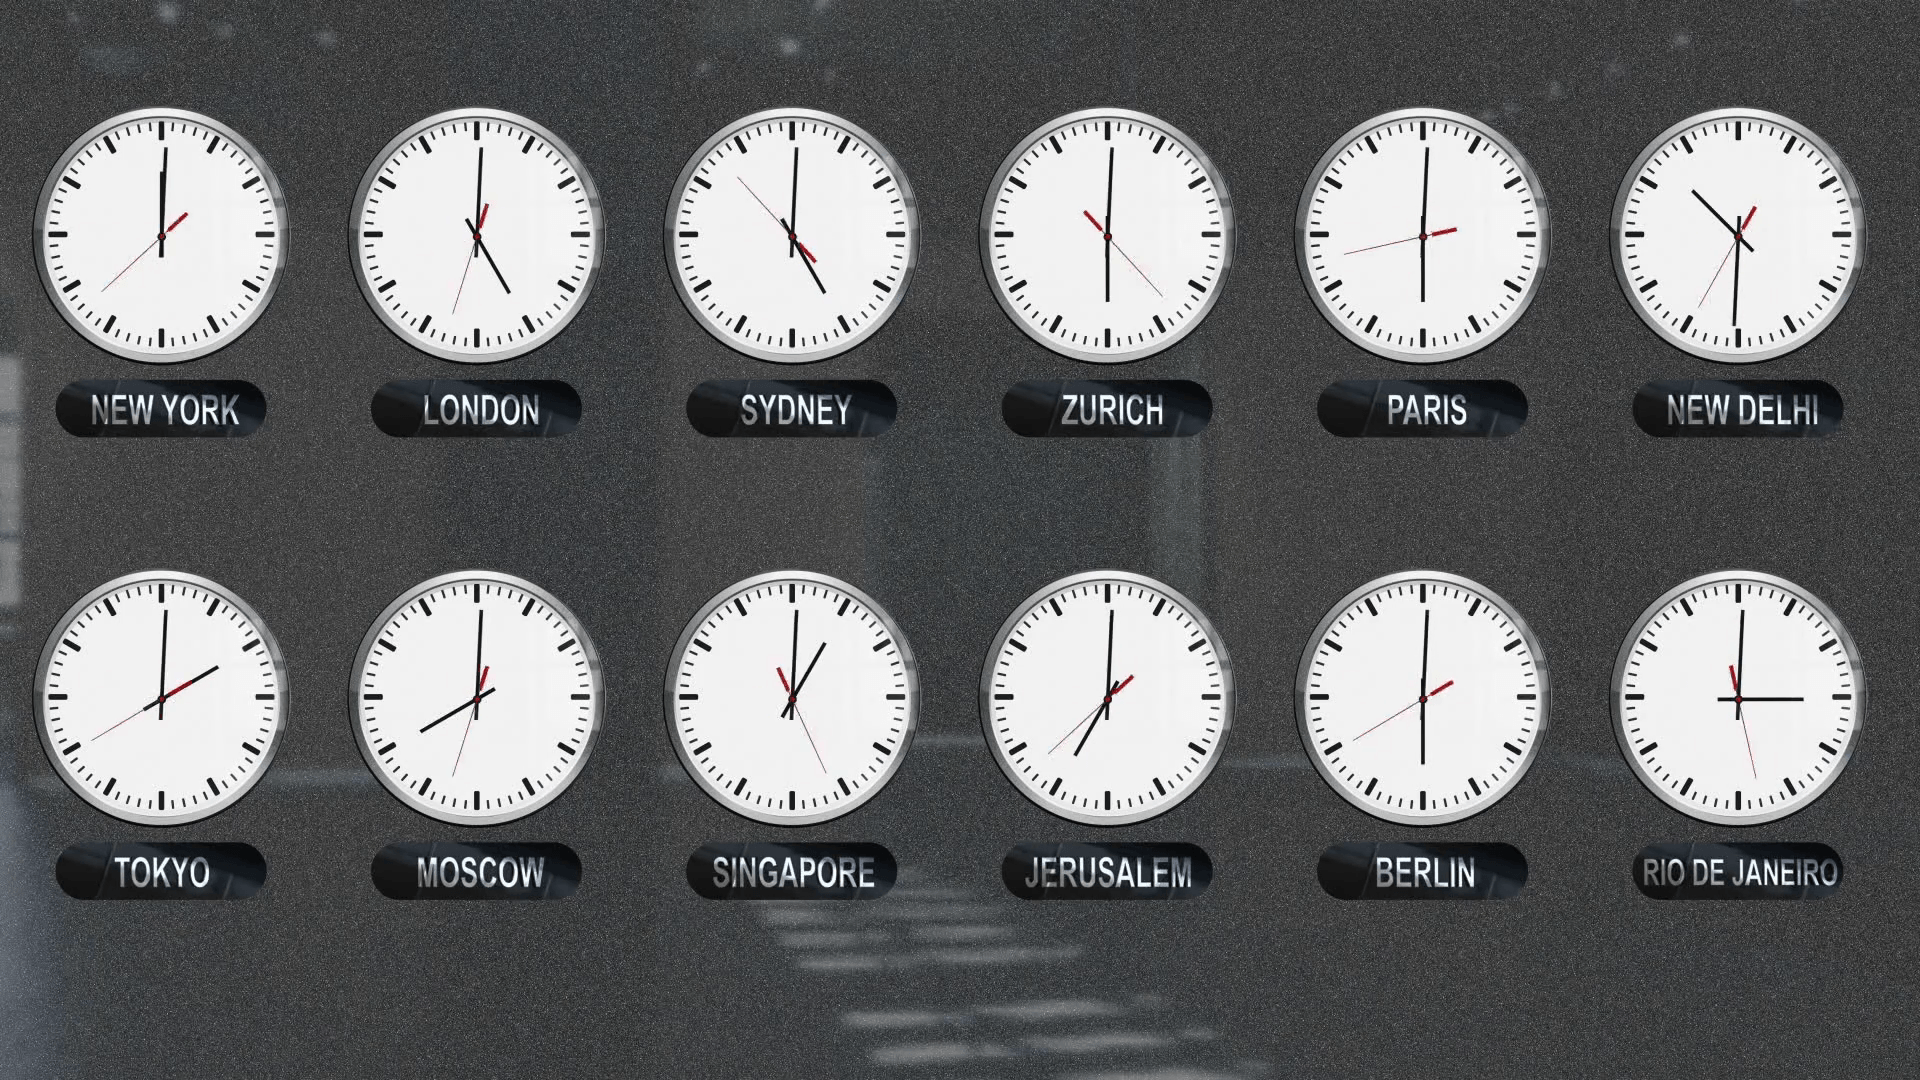 desktop clocks for windows 10 free download